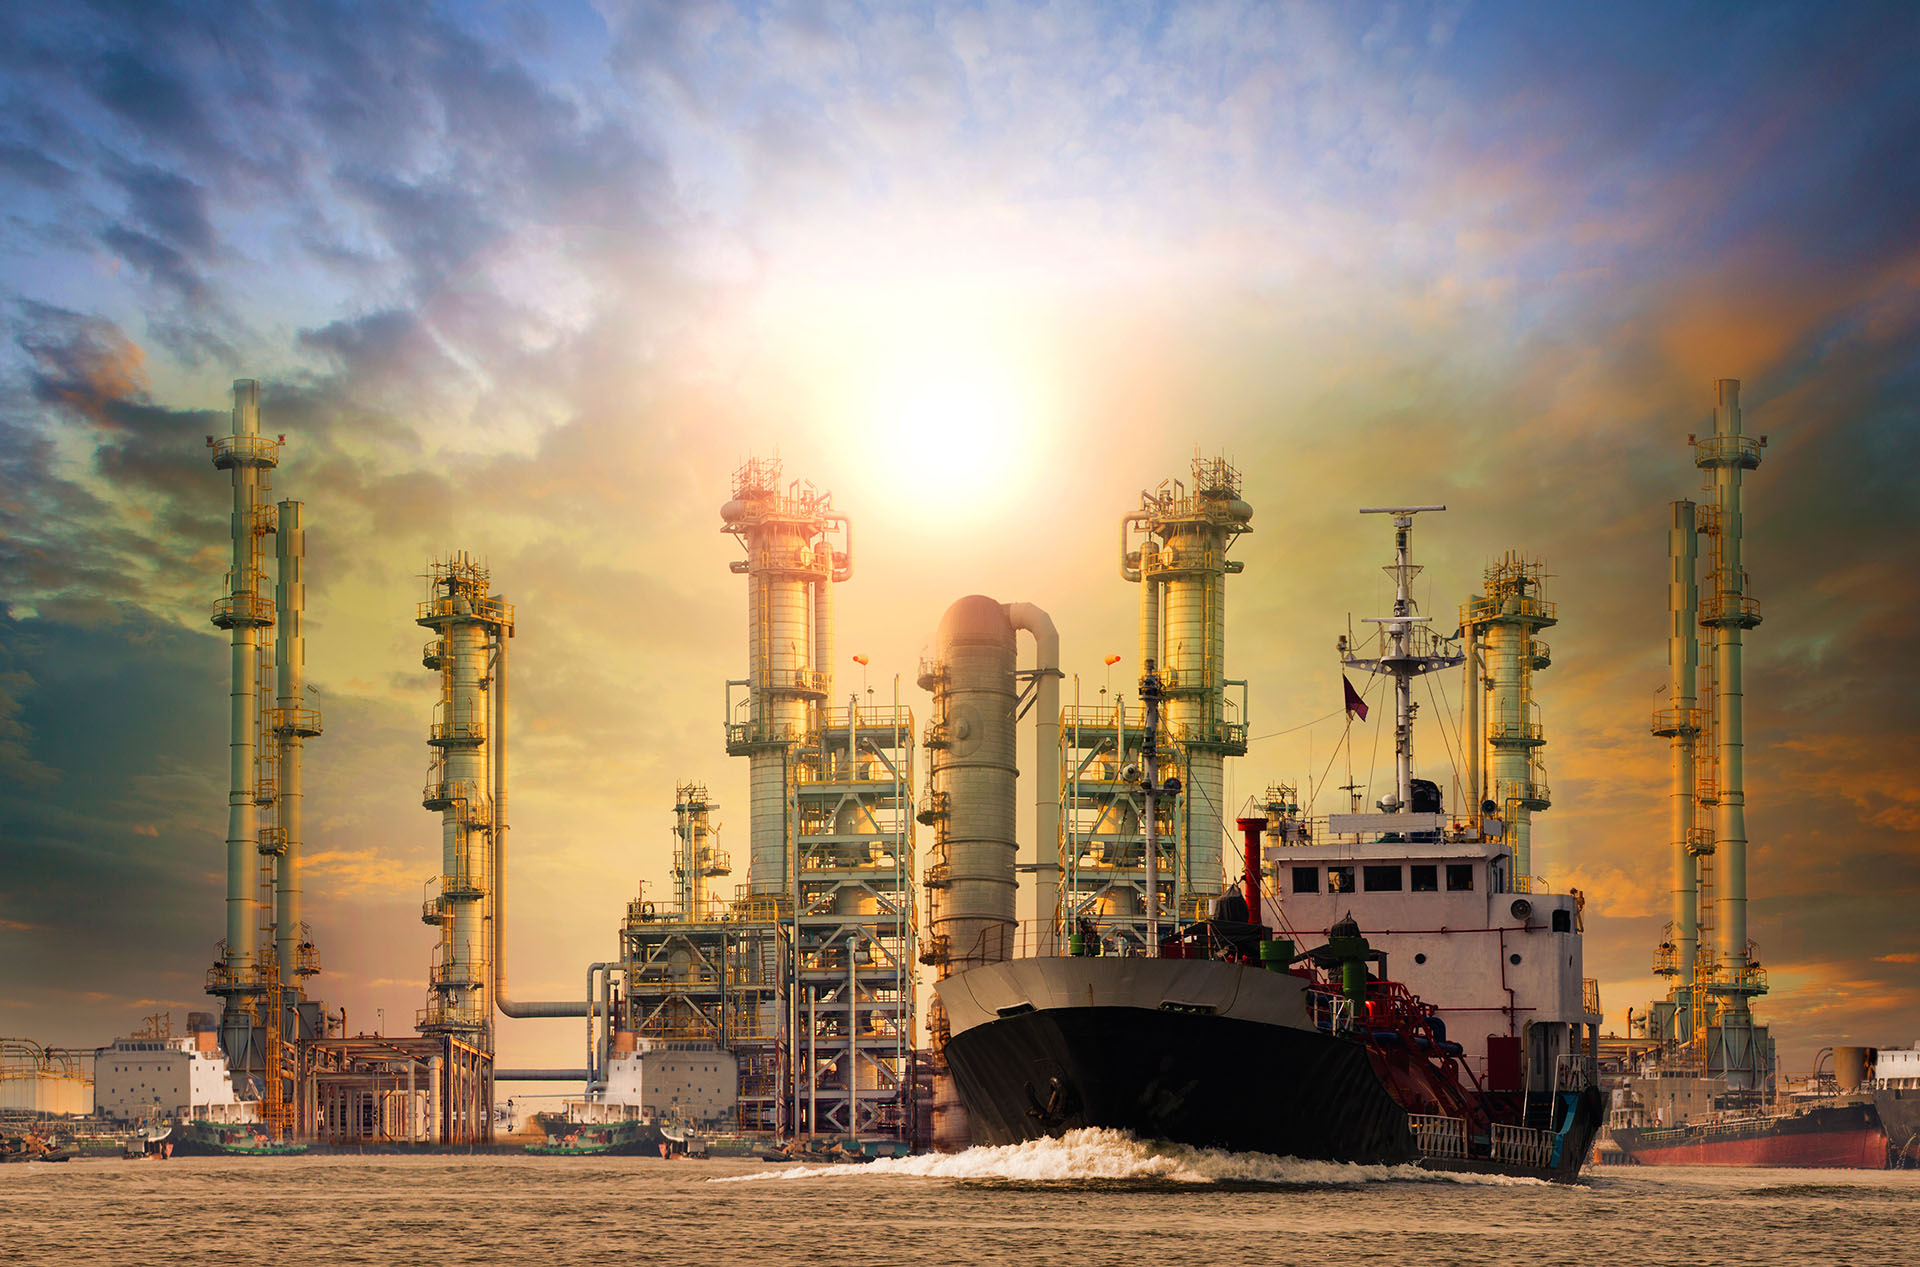 Petroleum refiners and shippers struggle over marine fuel | Arthur D Little